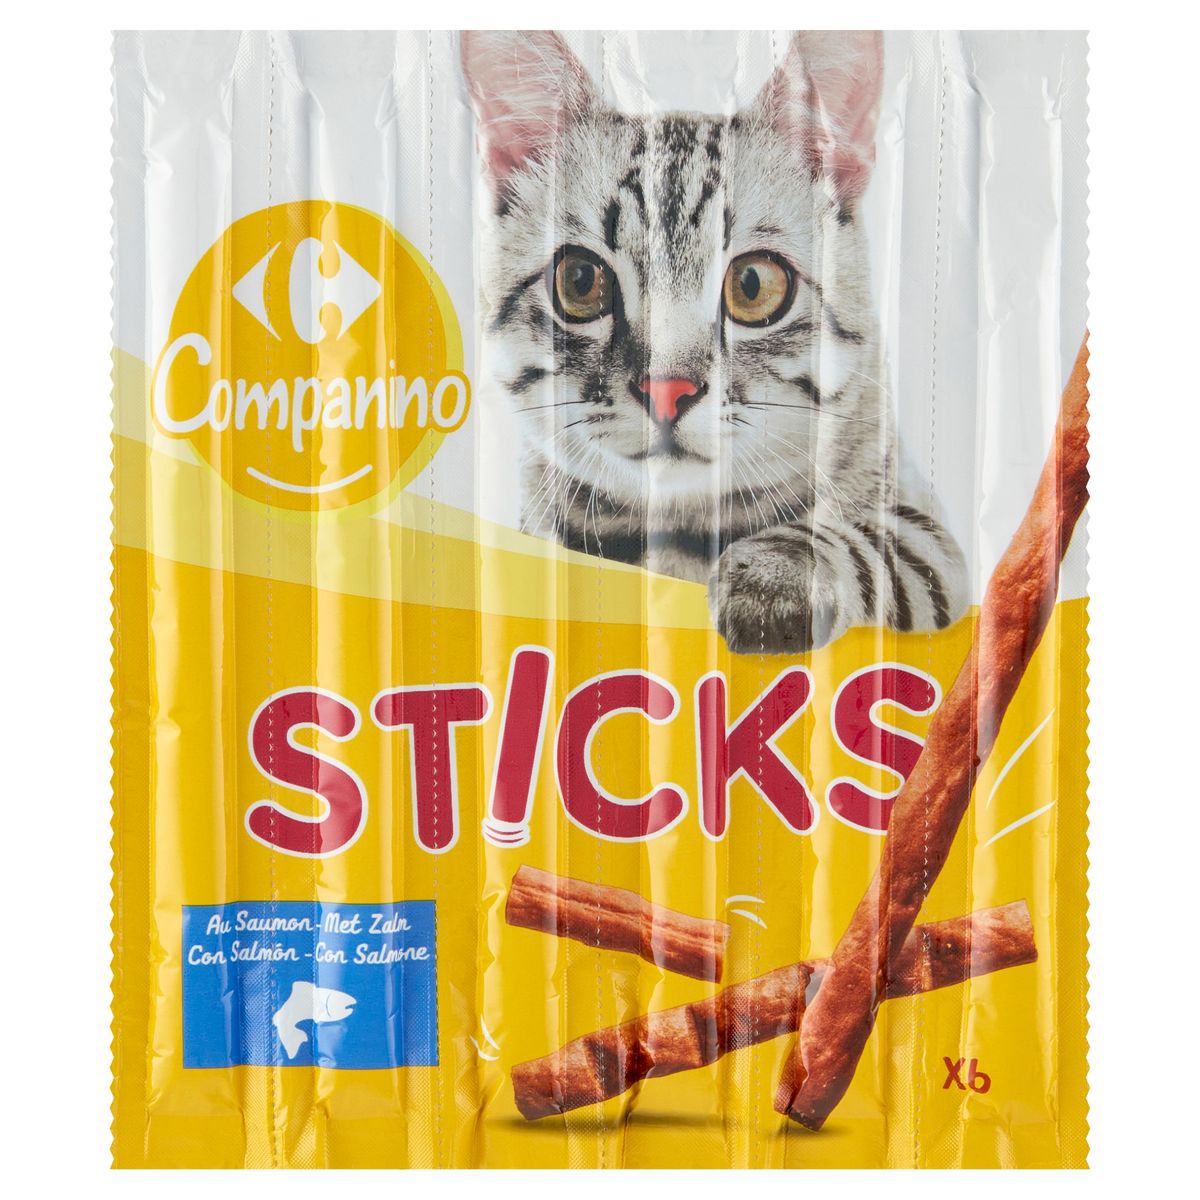 Carrefour Companino Sticks met Zalm 6 x 5 g